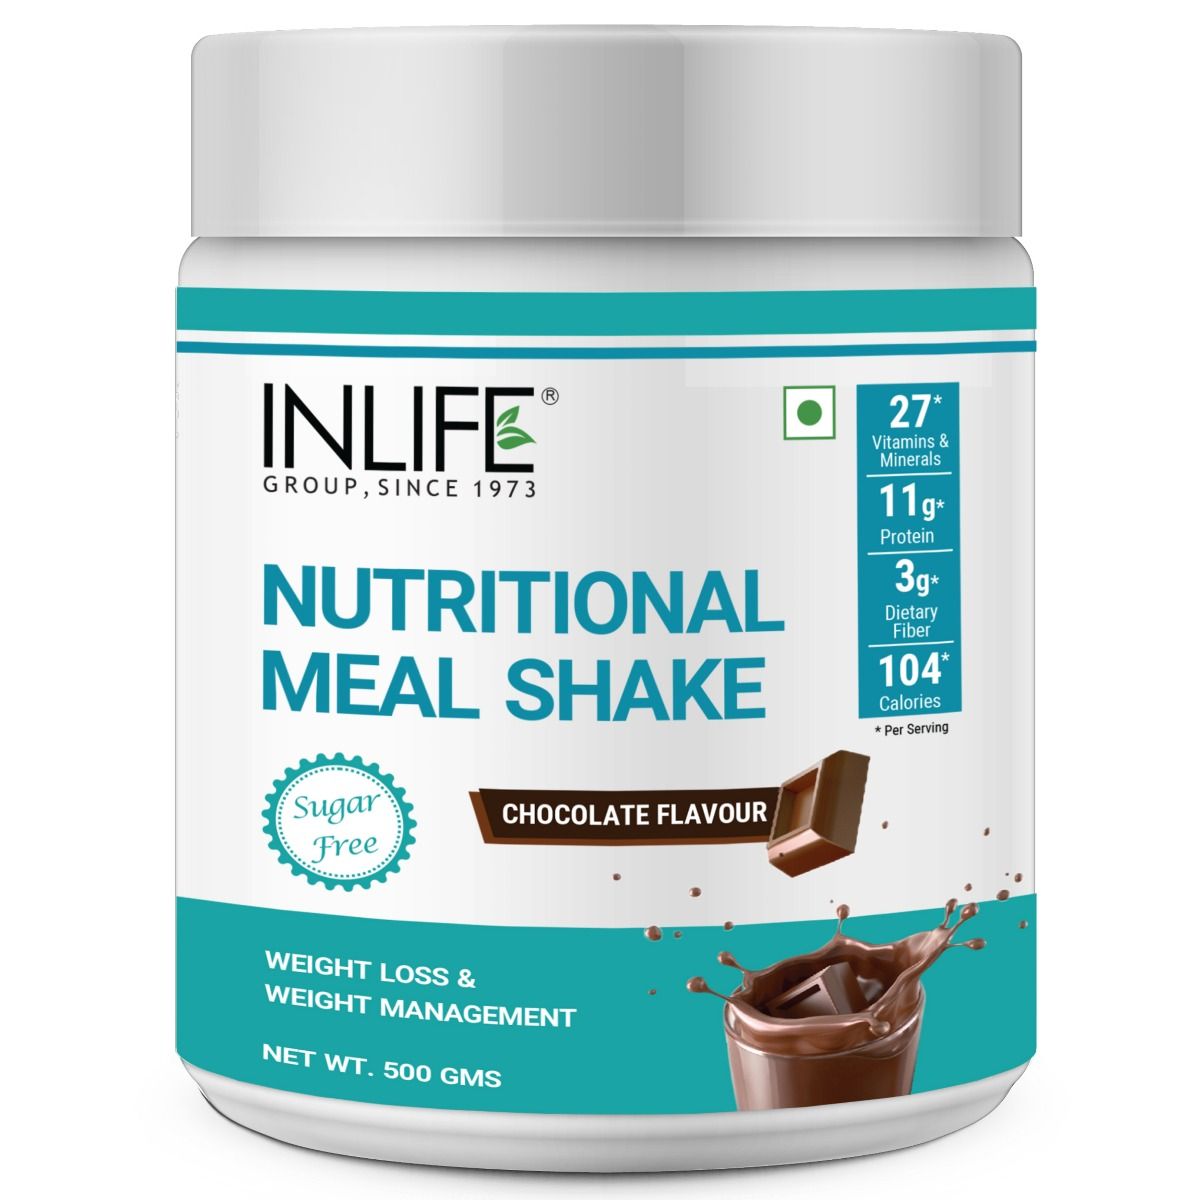 Buy Inlife Chocolate Flavored Sugar Free Nutritional Meal Shake, 500 gm Online